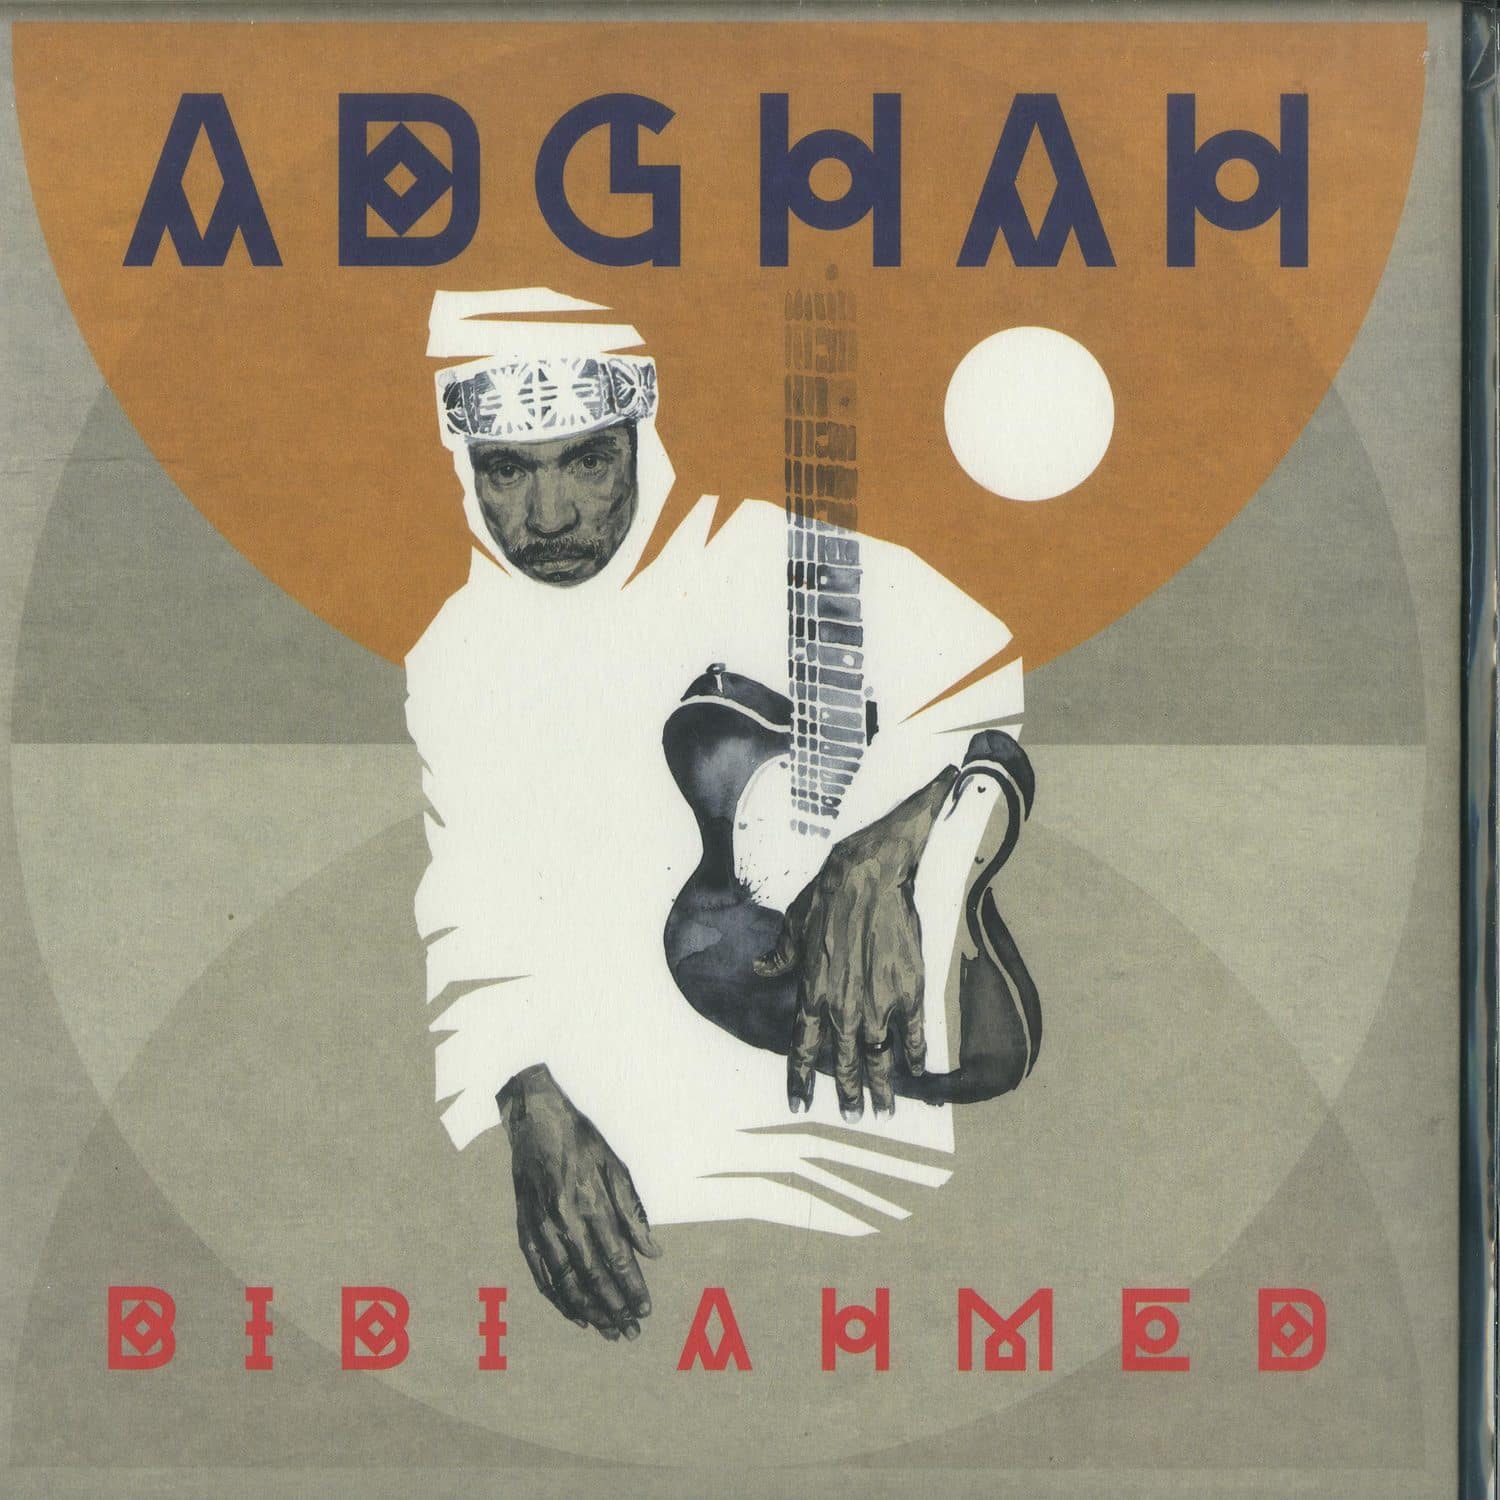 Bibi Ahmed - ADGHAH 